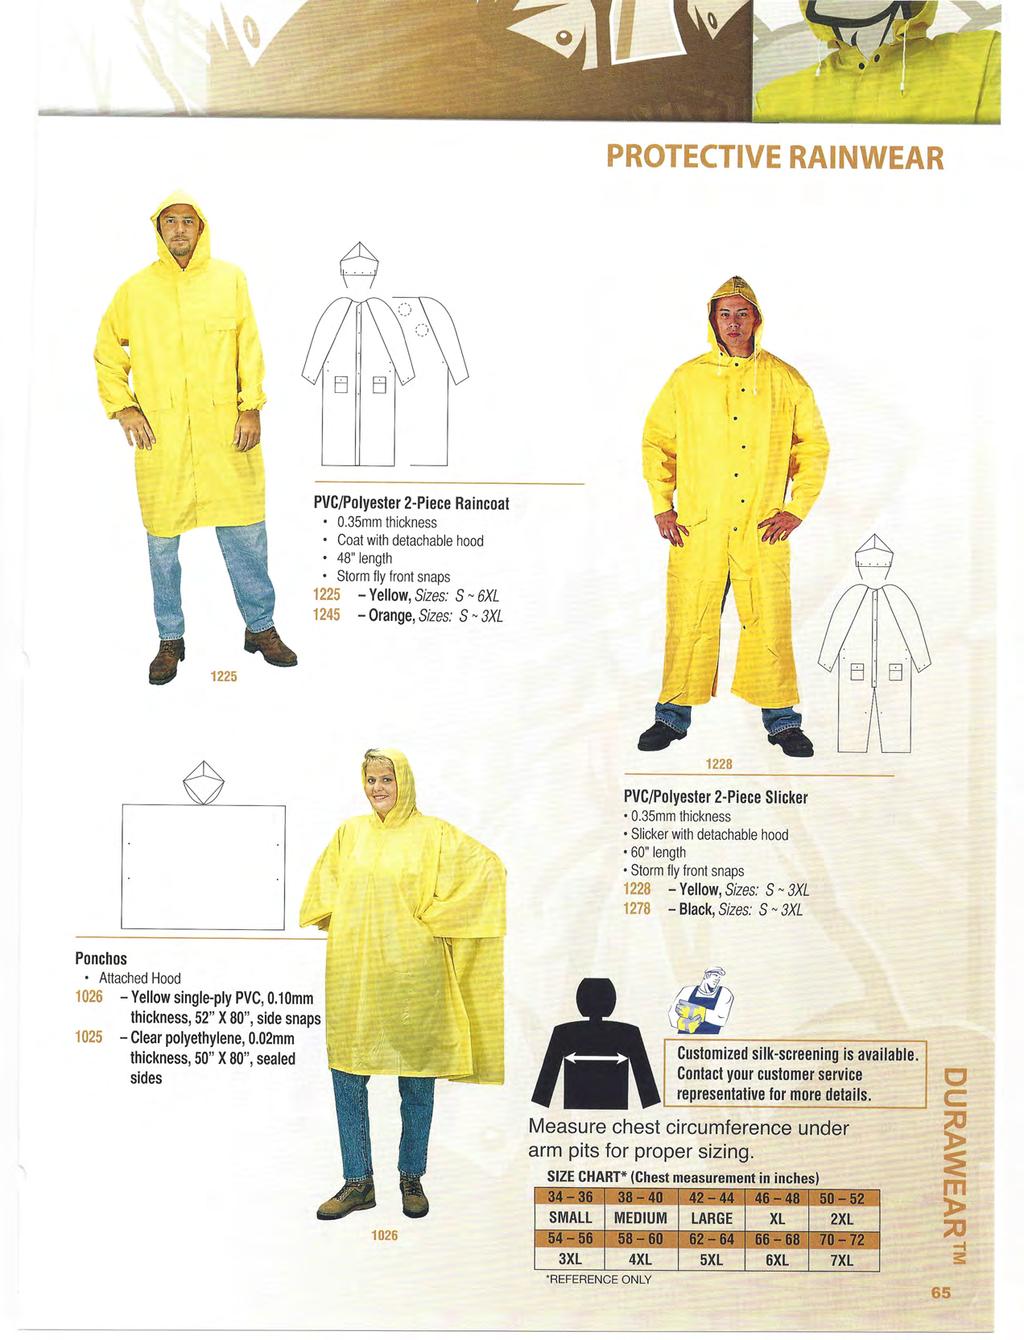 PROTECTIVE RAINWEAR I 1225 PVC/Polyester 2-Piece Raincoat.35mm thickness Coat with detachable hood 48" length Storm fly front snaps 1225 - Yellow, Sizes: S- 6XL 1245 - Orange, Sizes: S - 3XL I./ I.